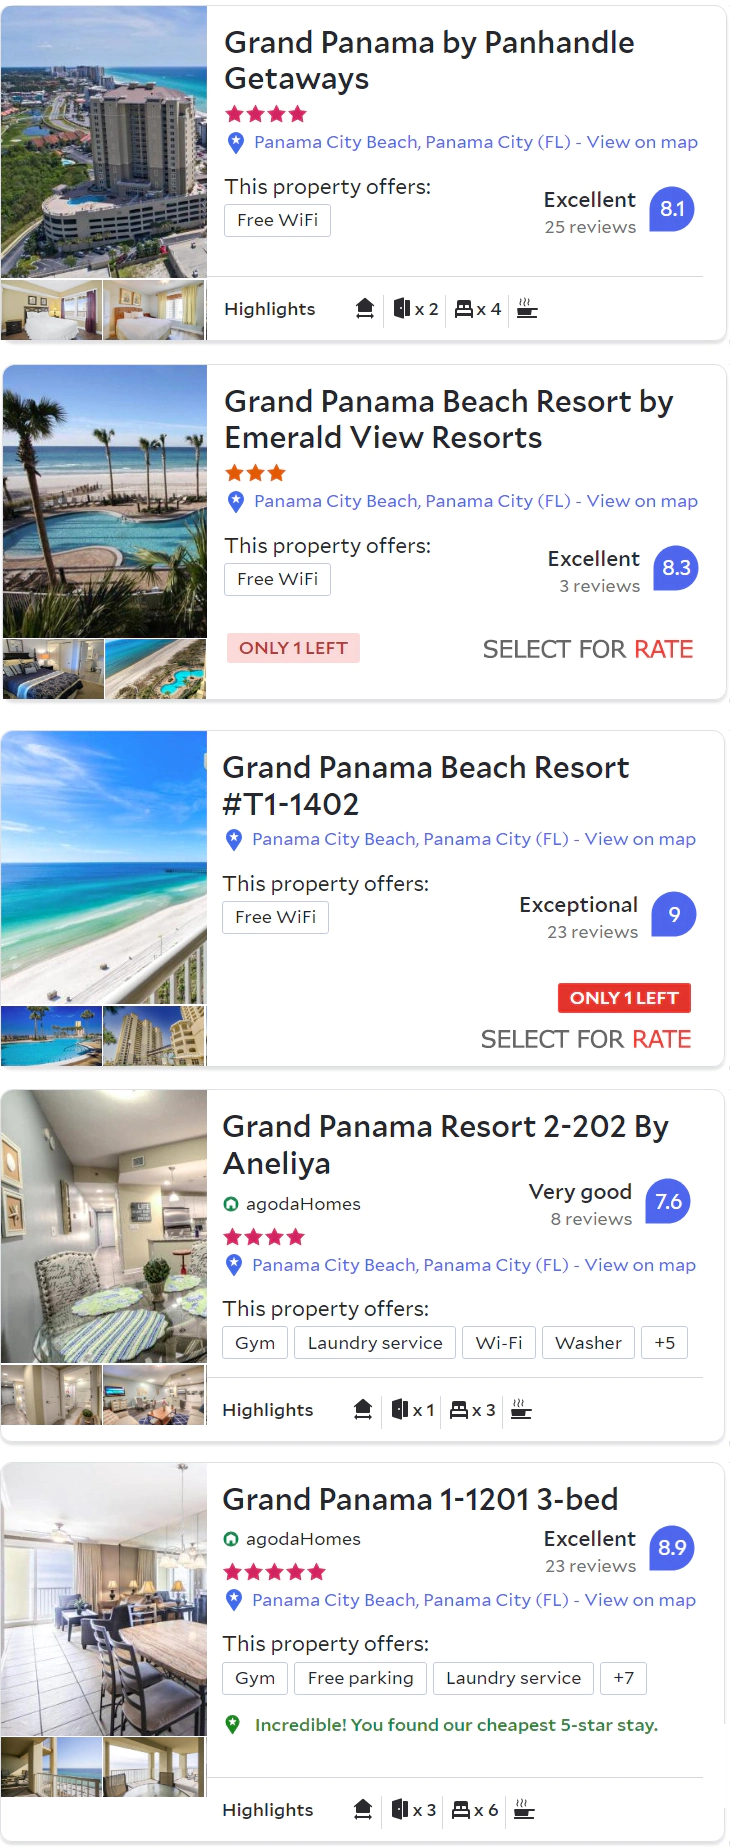 The Grand Panama Resort Panama City Beach Florida